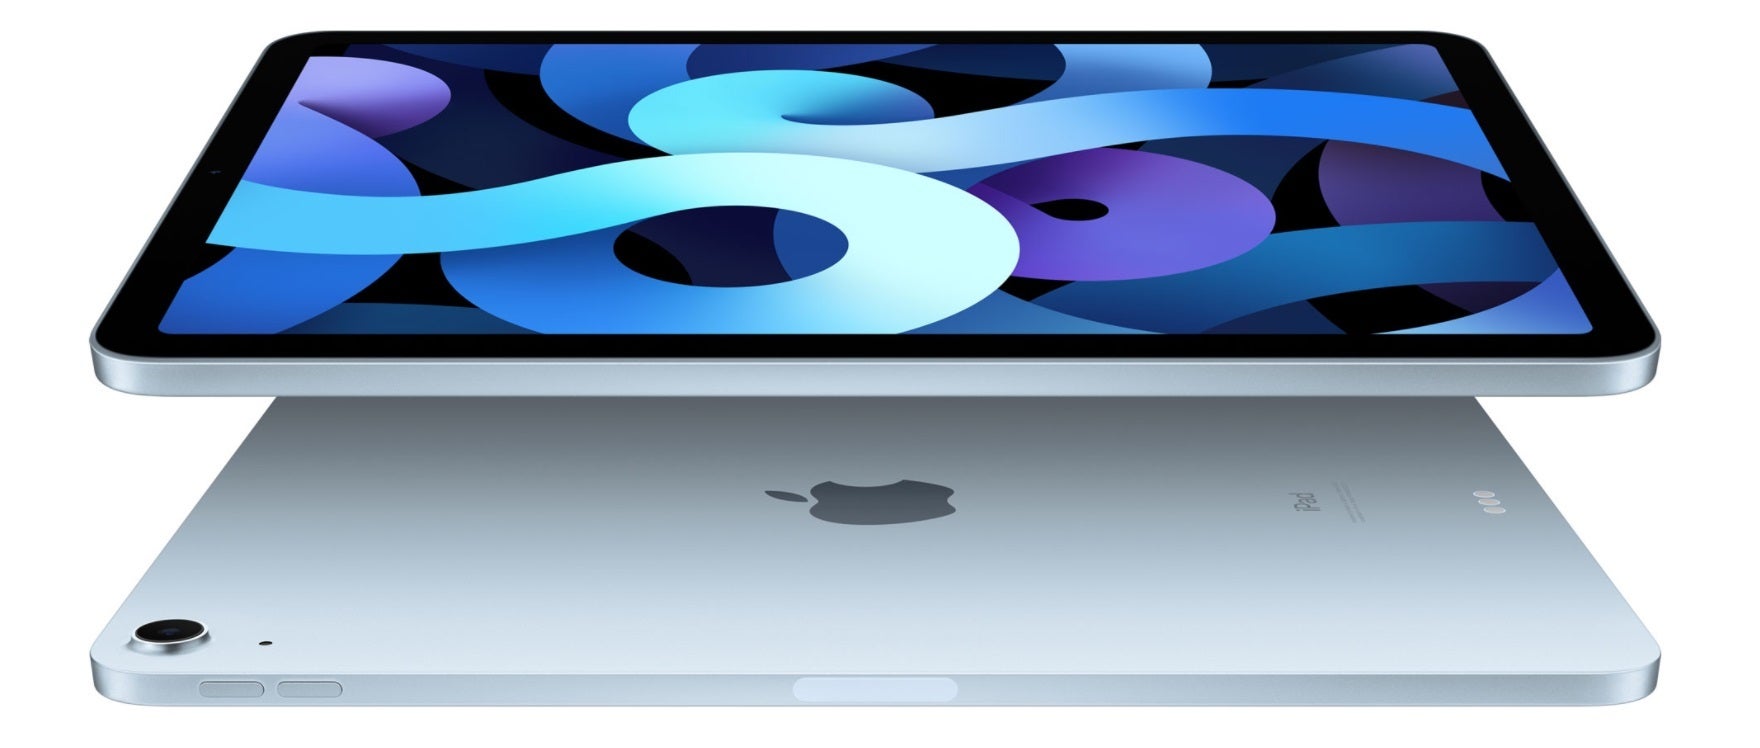 iPad Air 4 in Sky Blue - Apple iPad Air 4: all the new colors